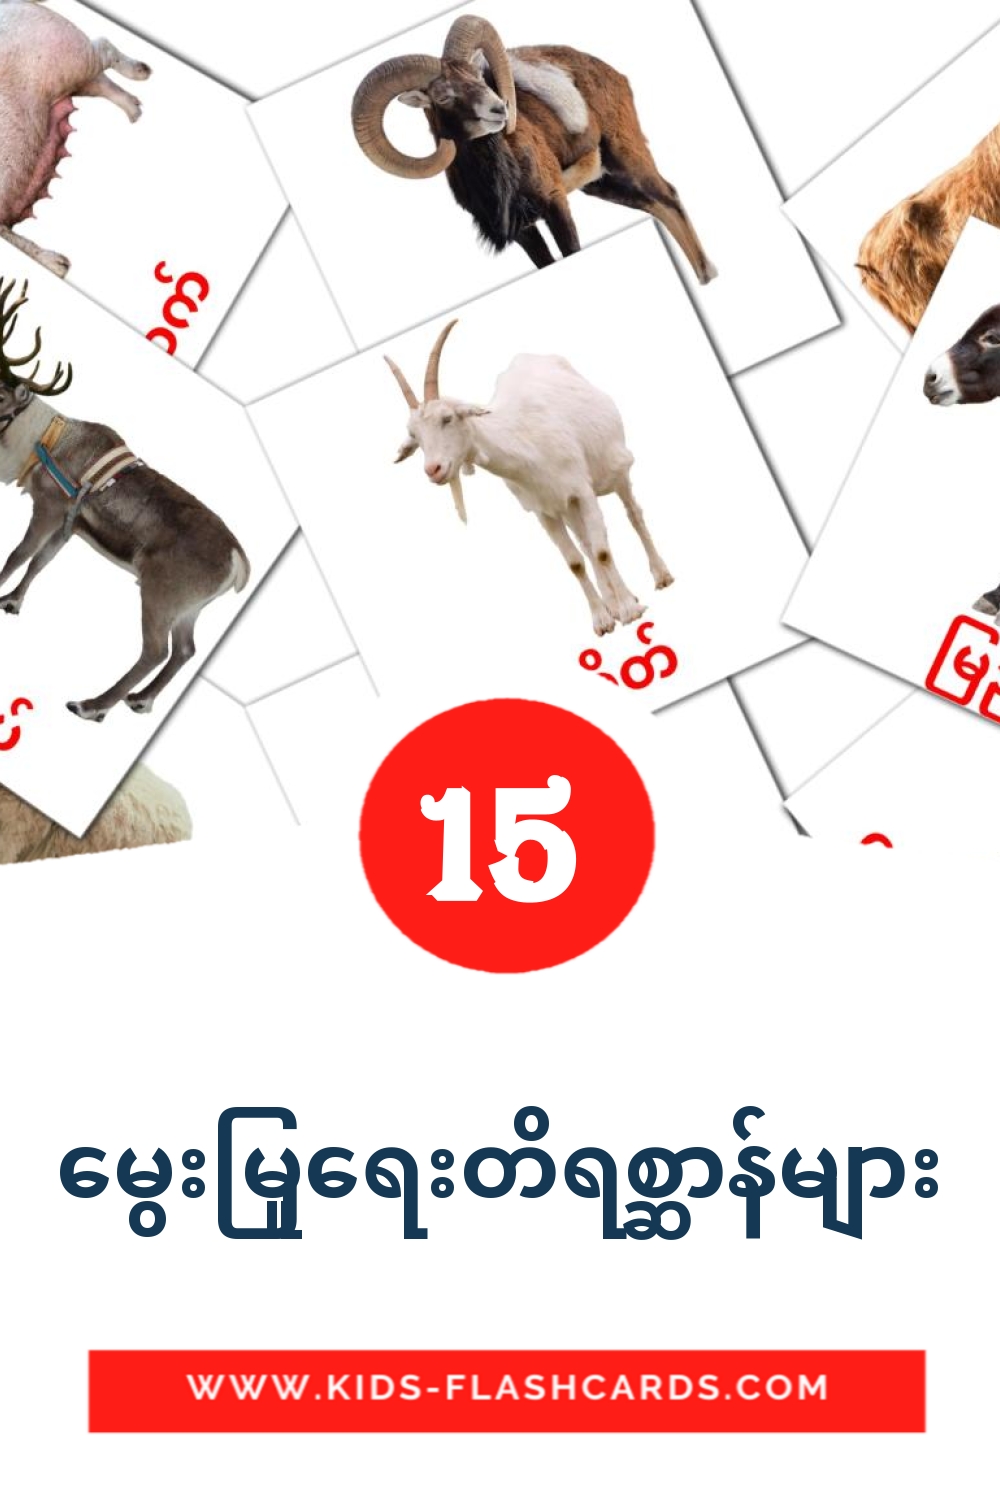 15 Cartões com Imagens de မွေးမြူရေးတိရစ္ဆာန်များ para Jardim de Infância em burmês